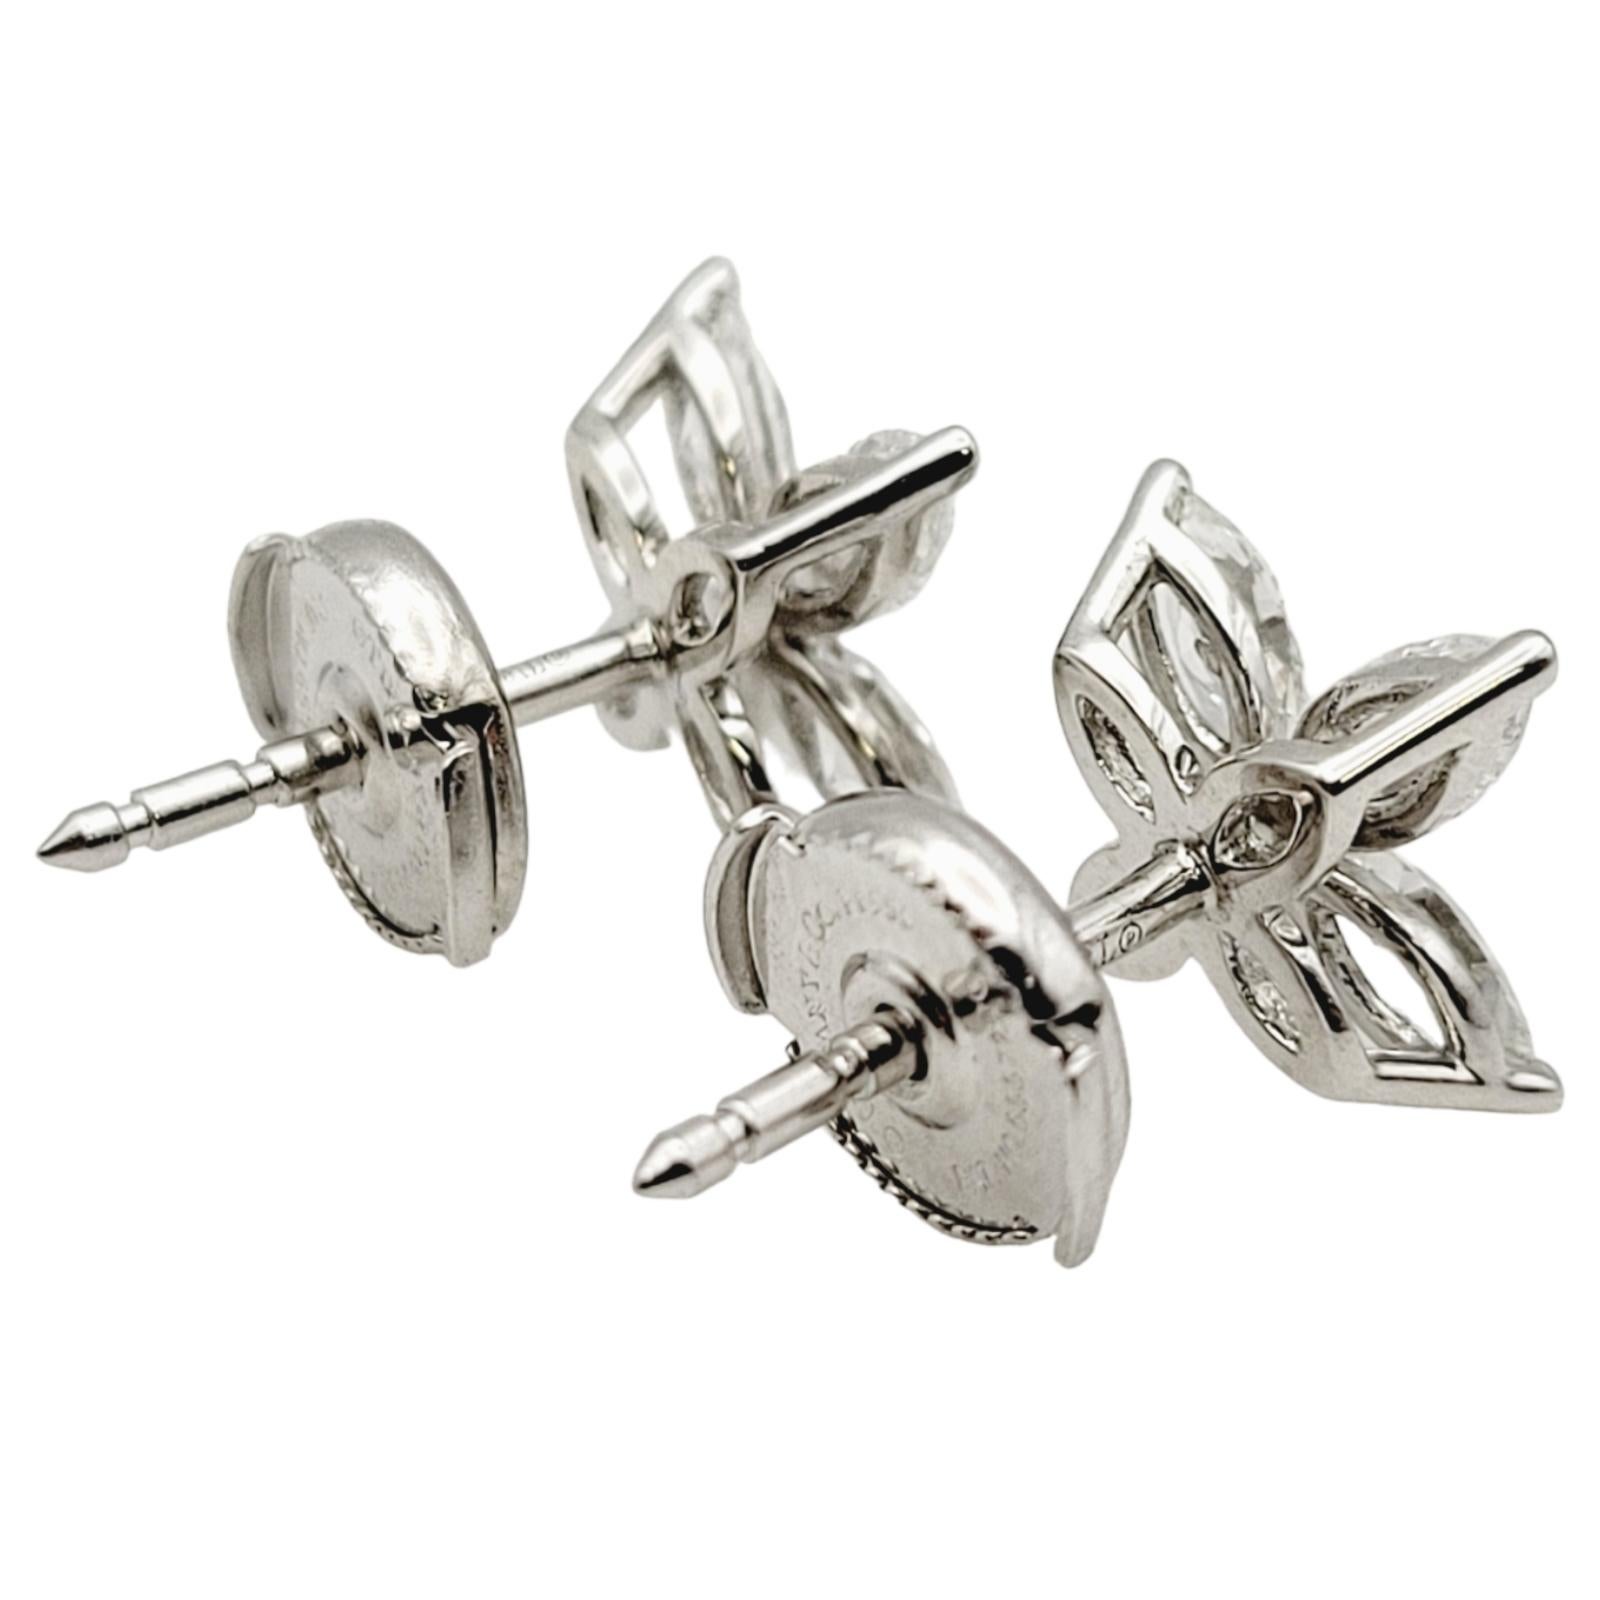 tiffany victoria earrings large